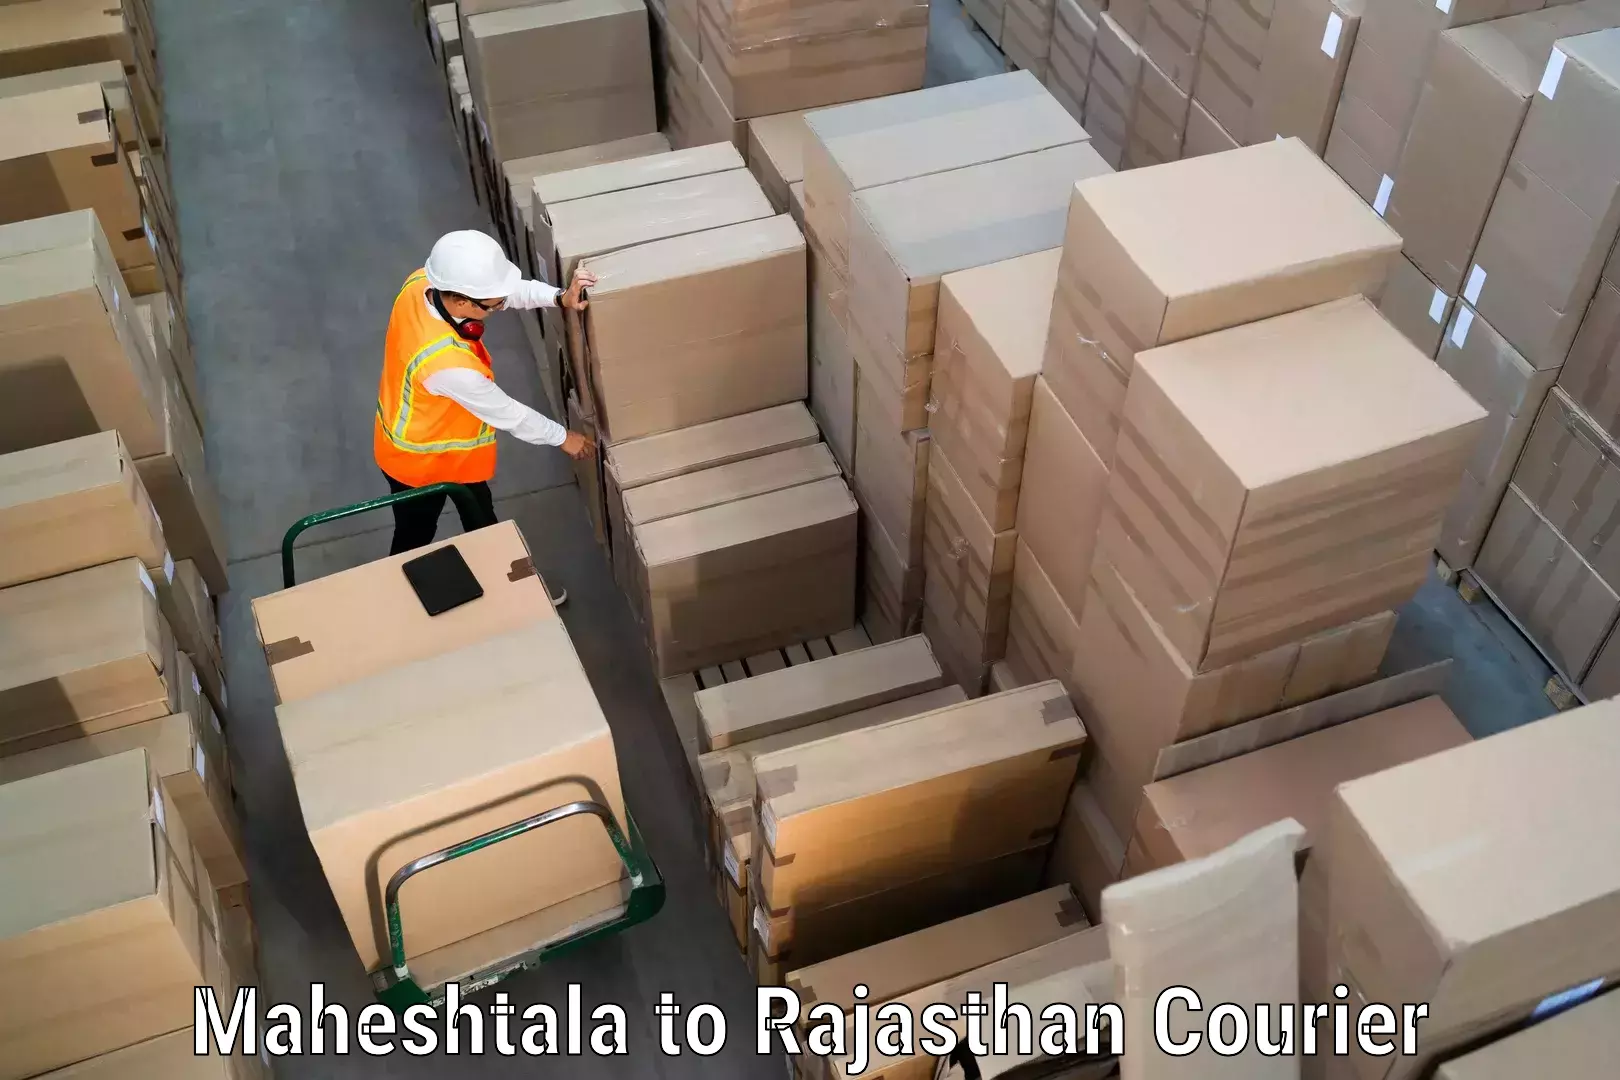 Courier service comparison Maheshtala to Pratapgarh Rajasthan